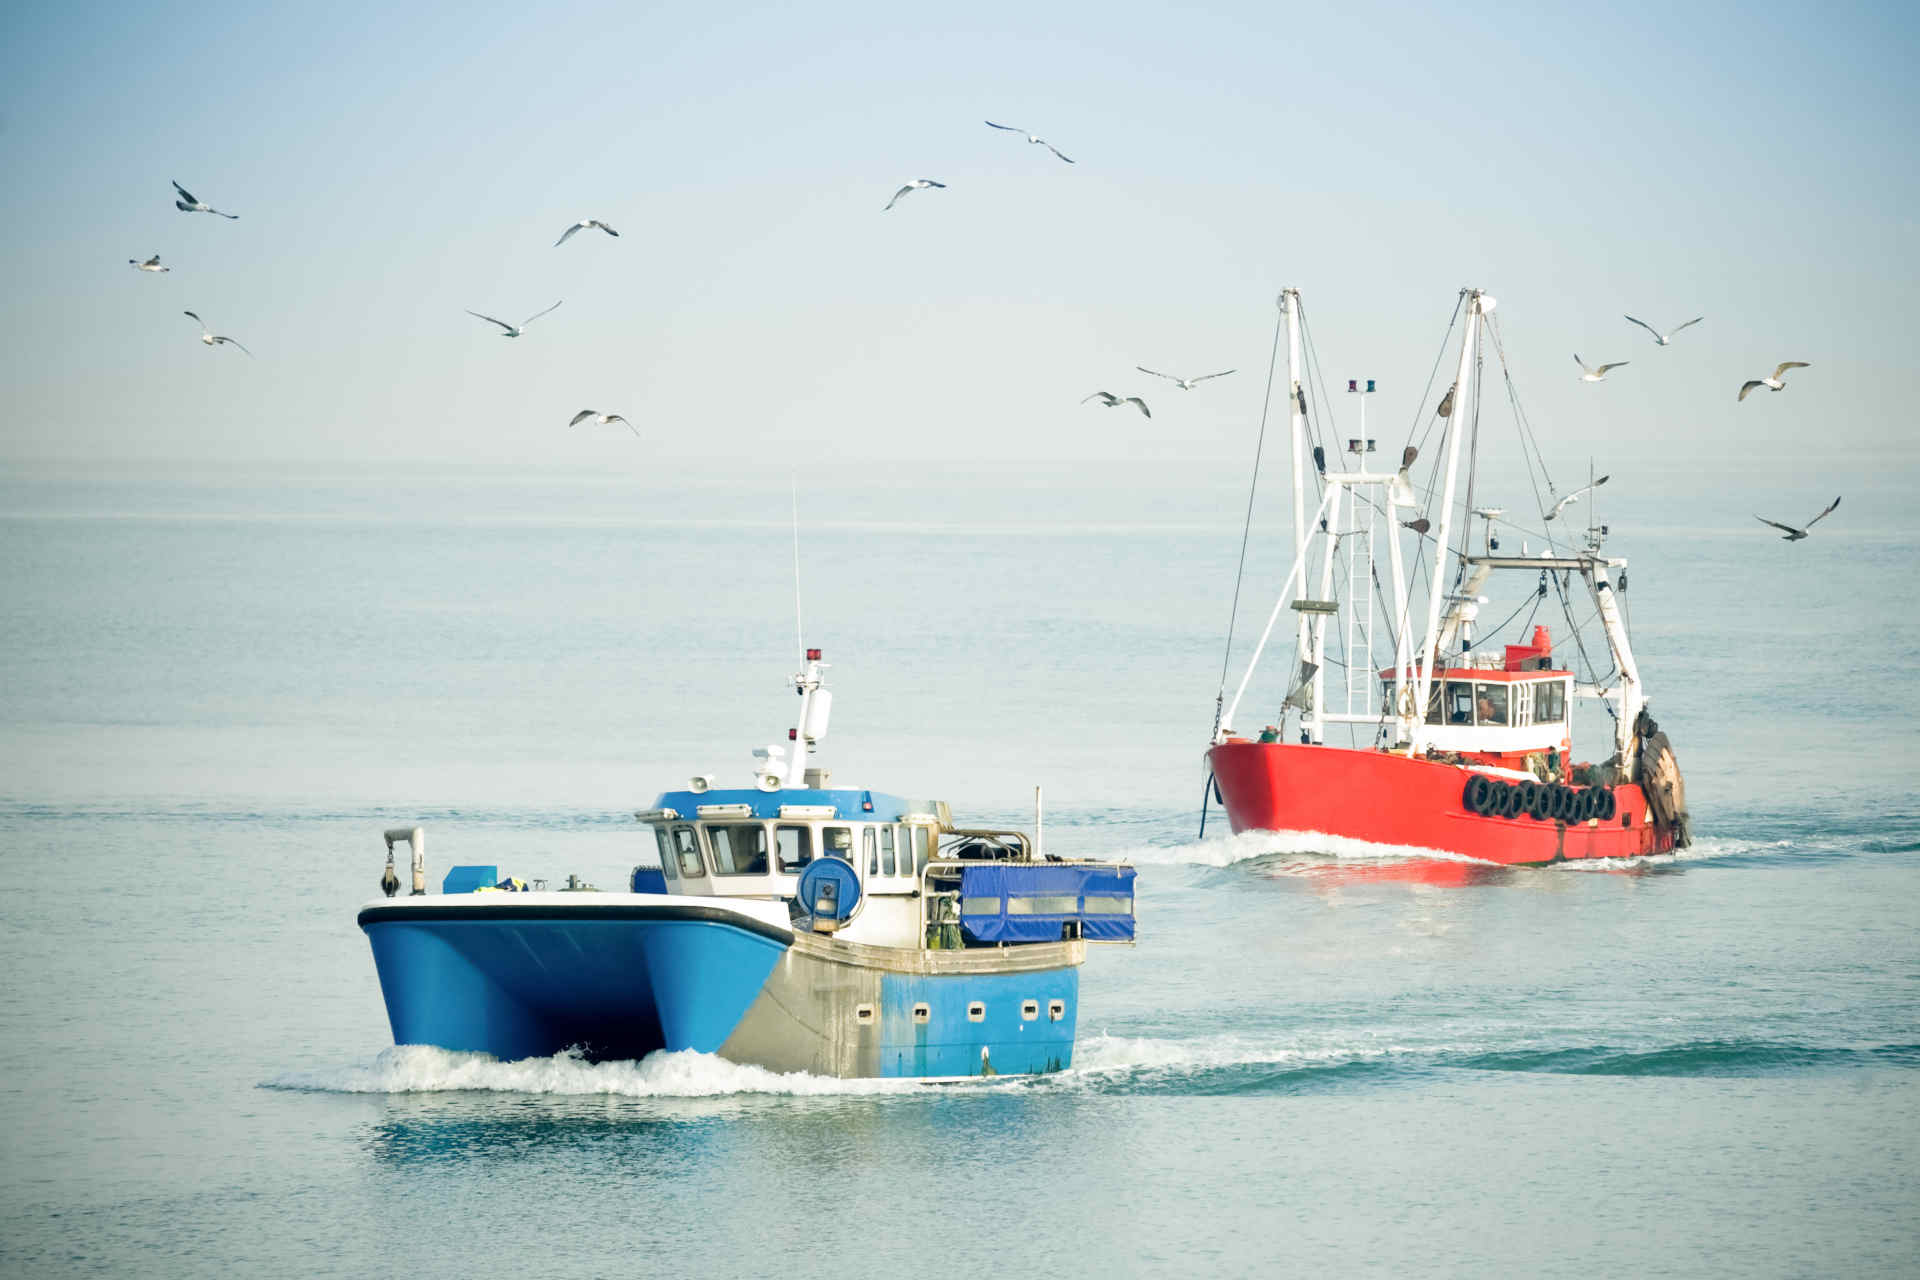 Yunani akan melarang trawl